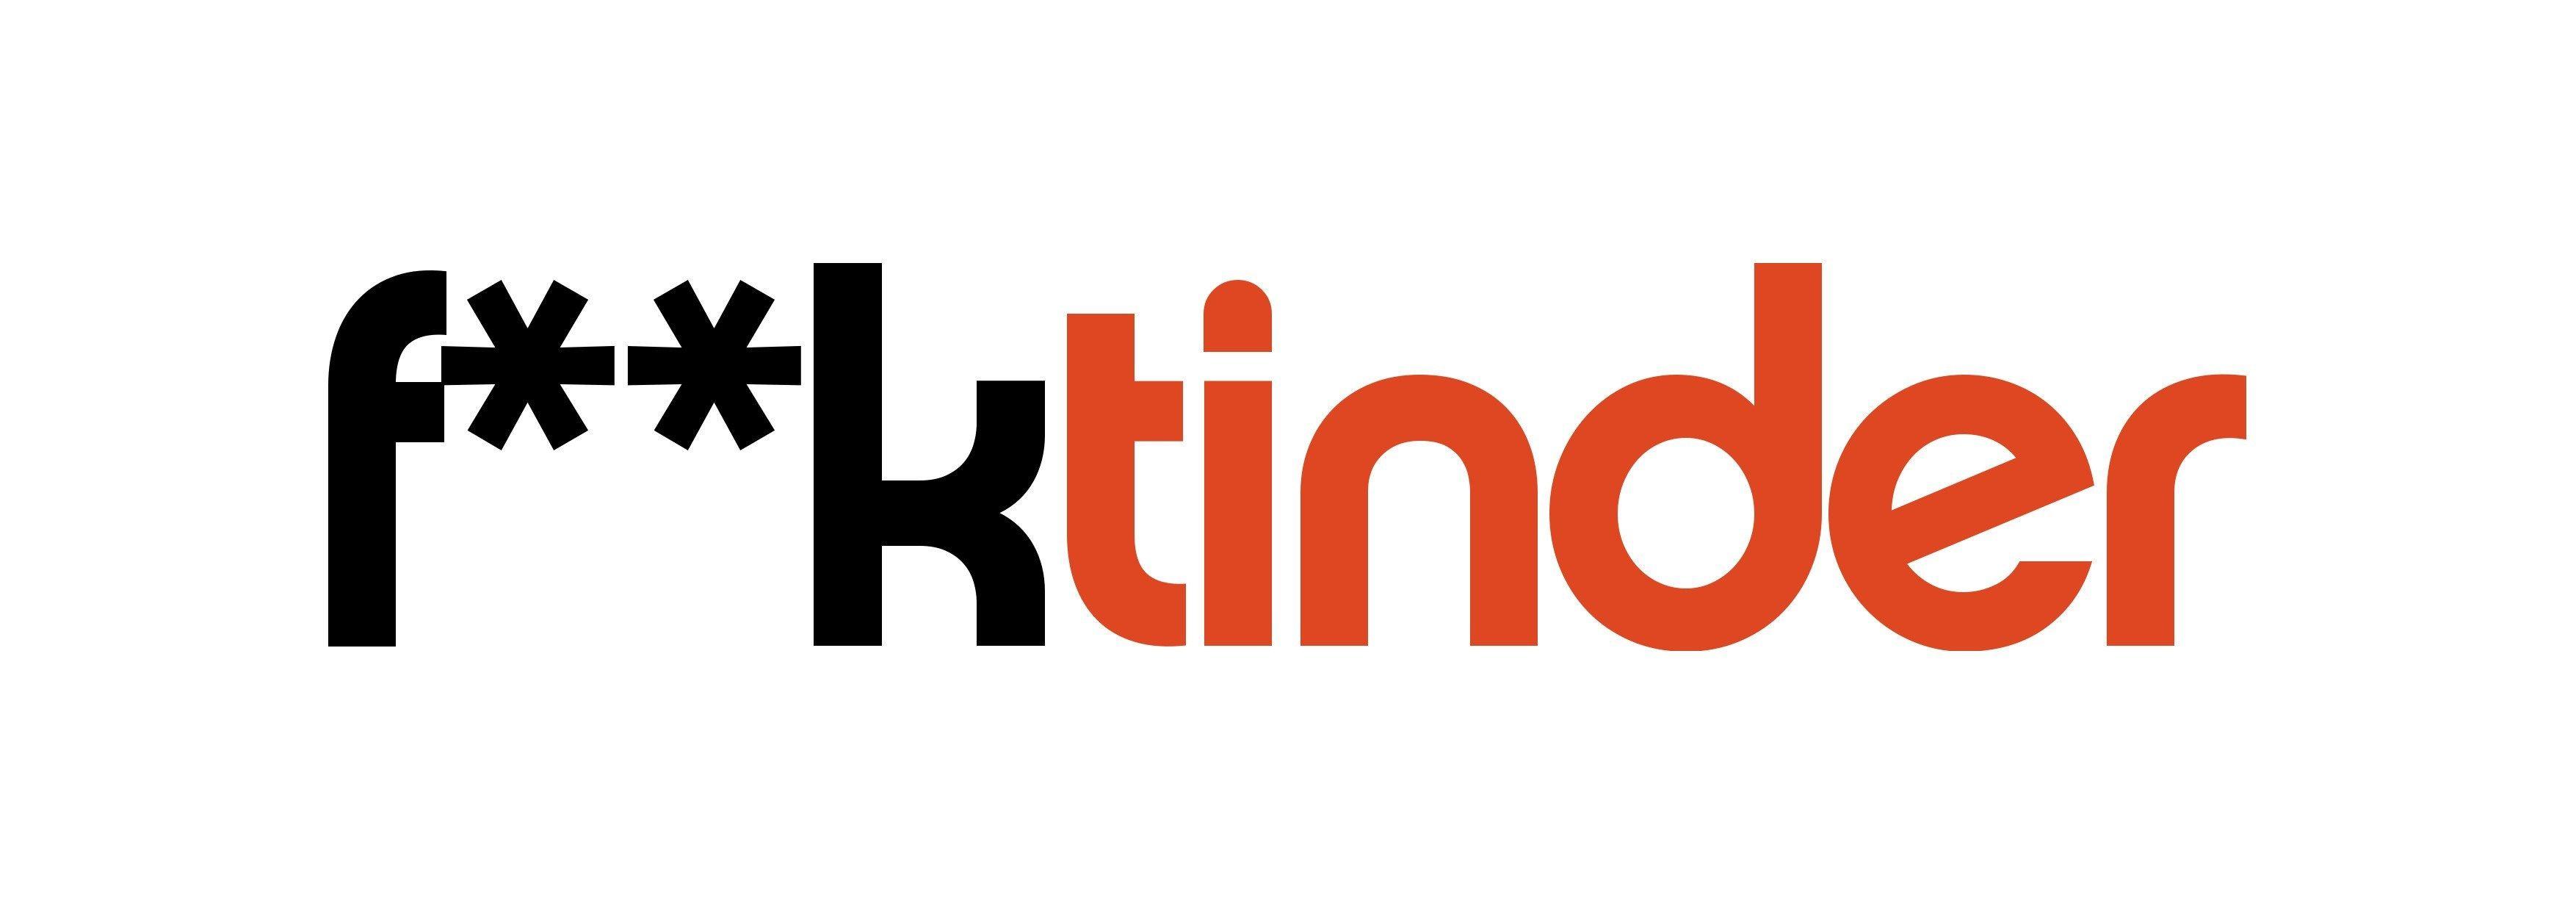 Tinder Logo - fuck tinder logo – Chris Henry